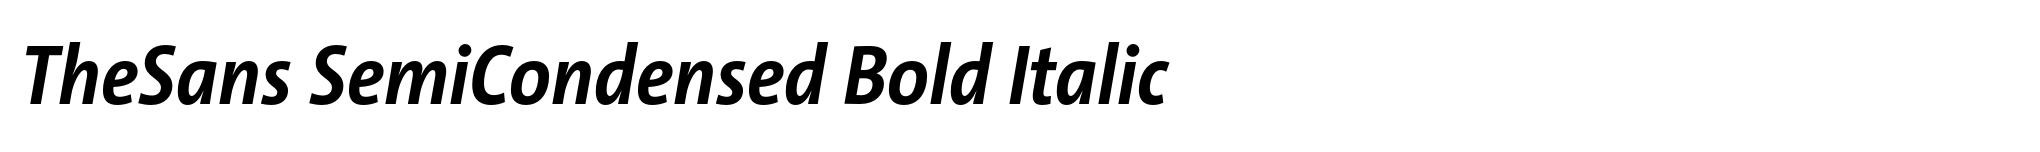 TheSans SemiCondensed Bold Italic image